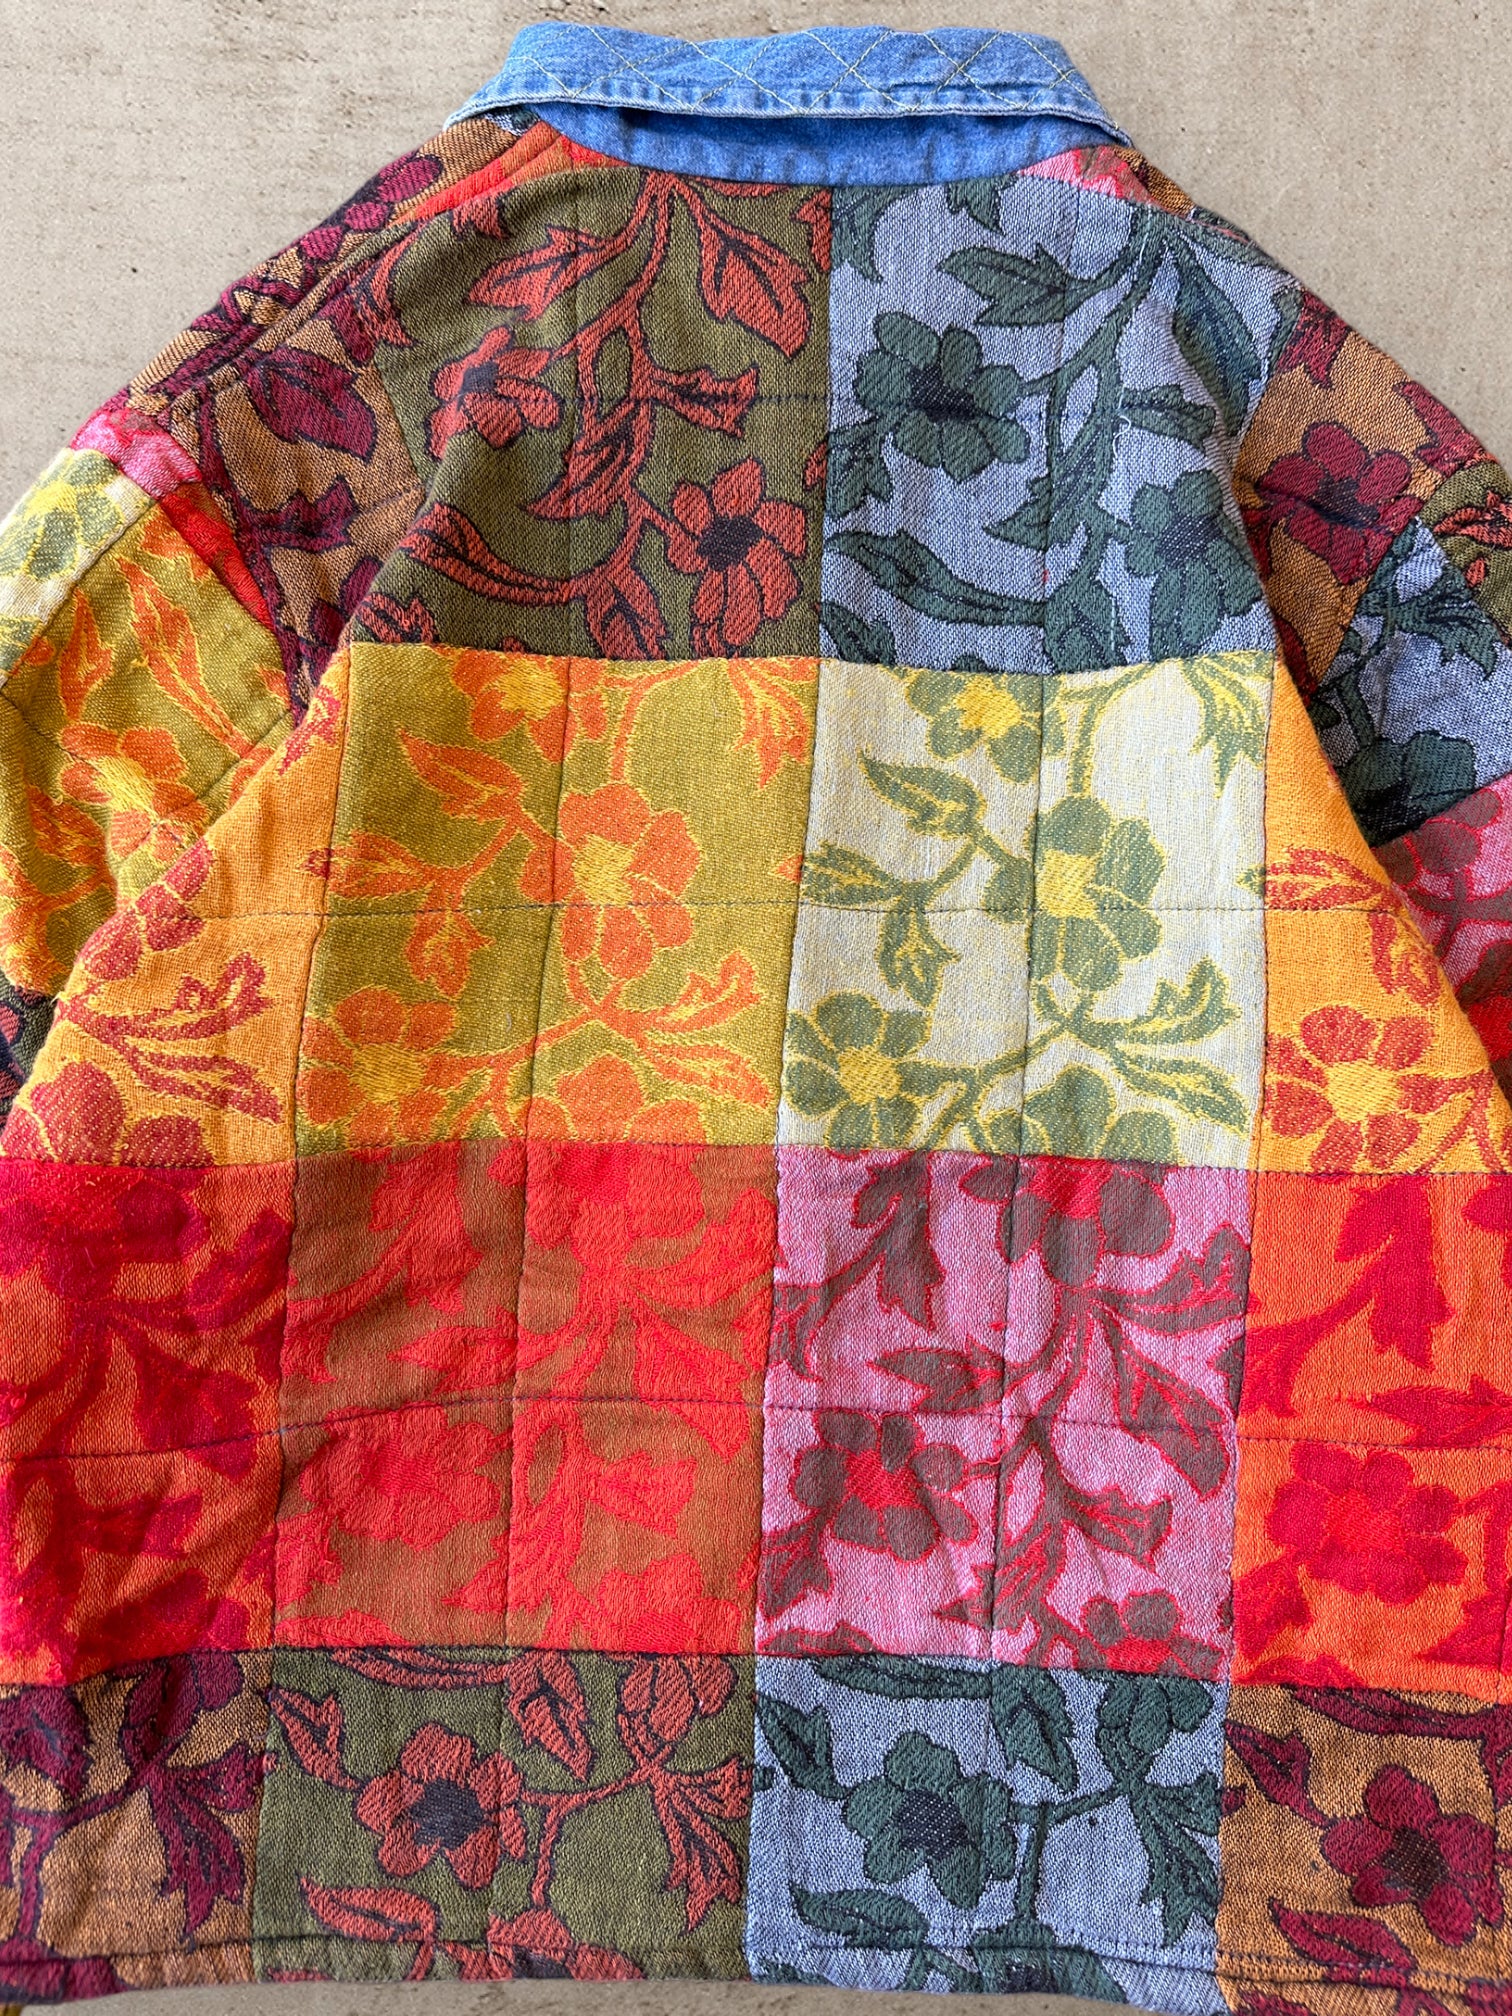 90s Tantrums Patchwork Floral Jacket - Medium